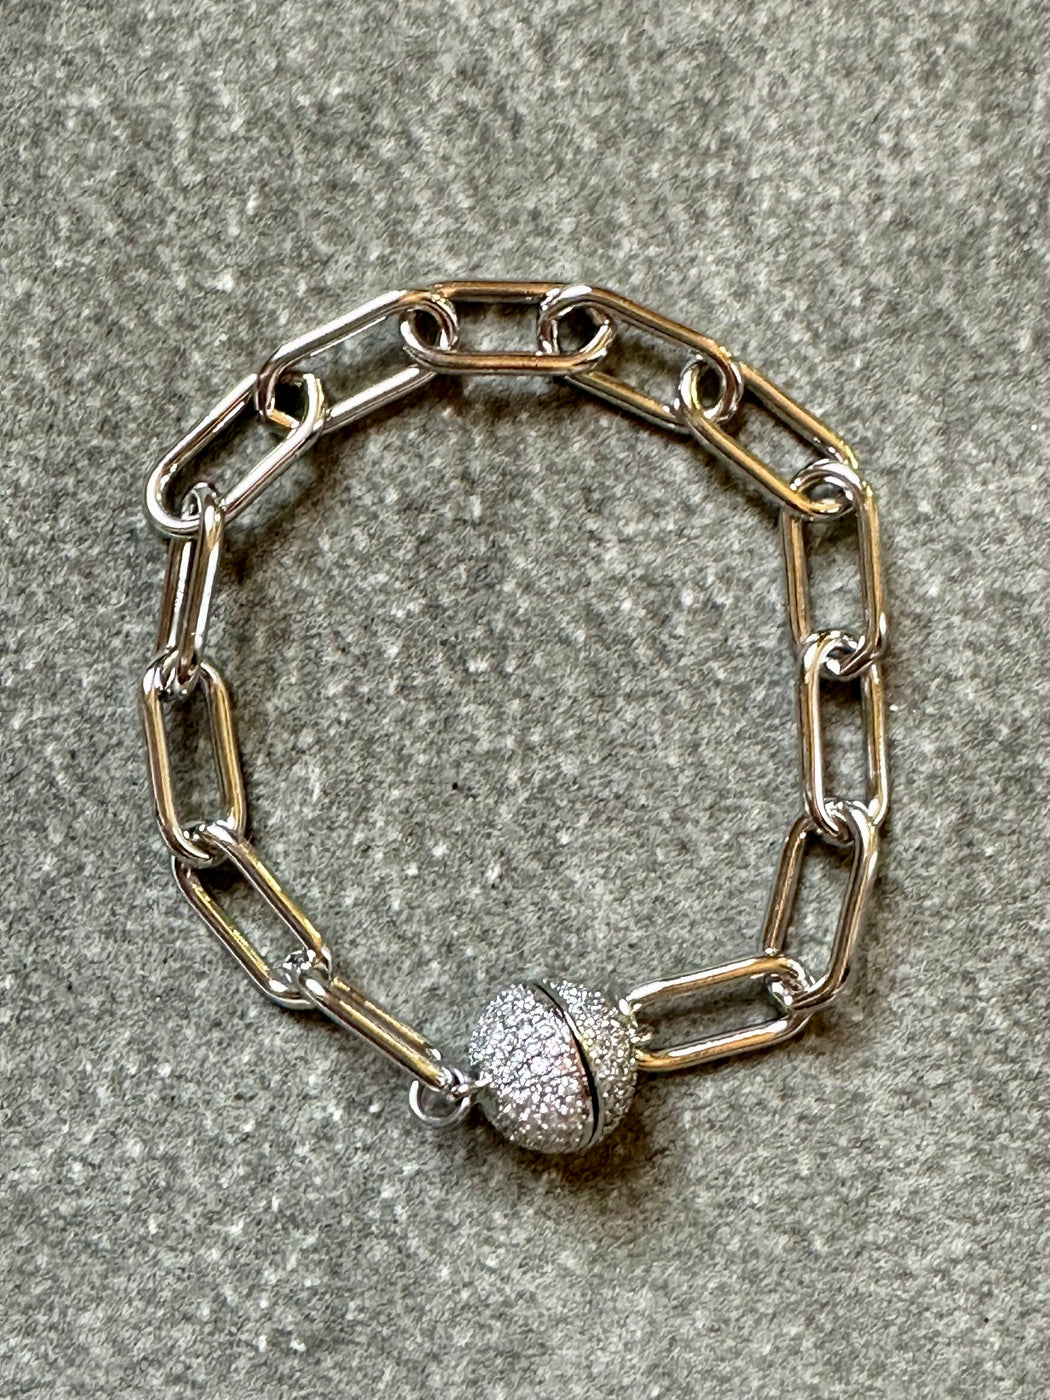 Magnetic "Ball" bracelet by VB & Co.